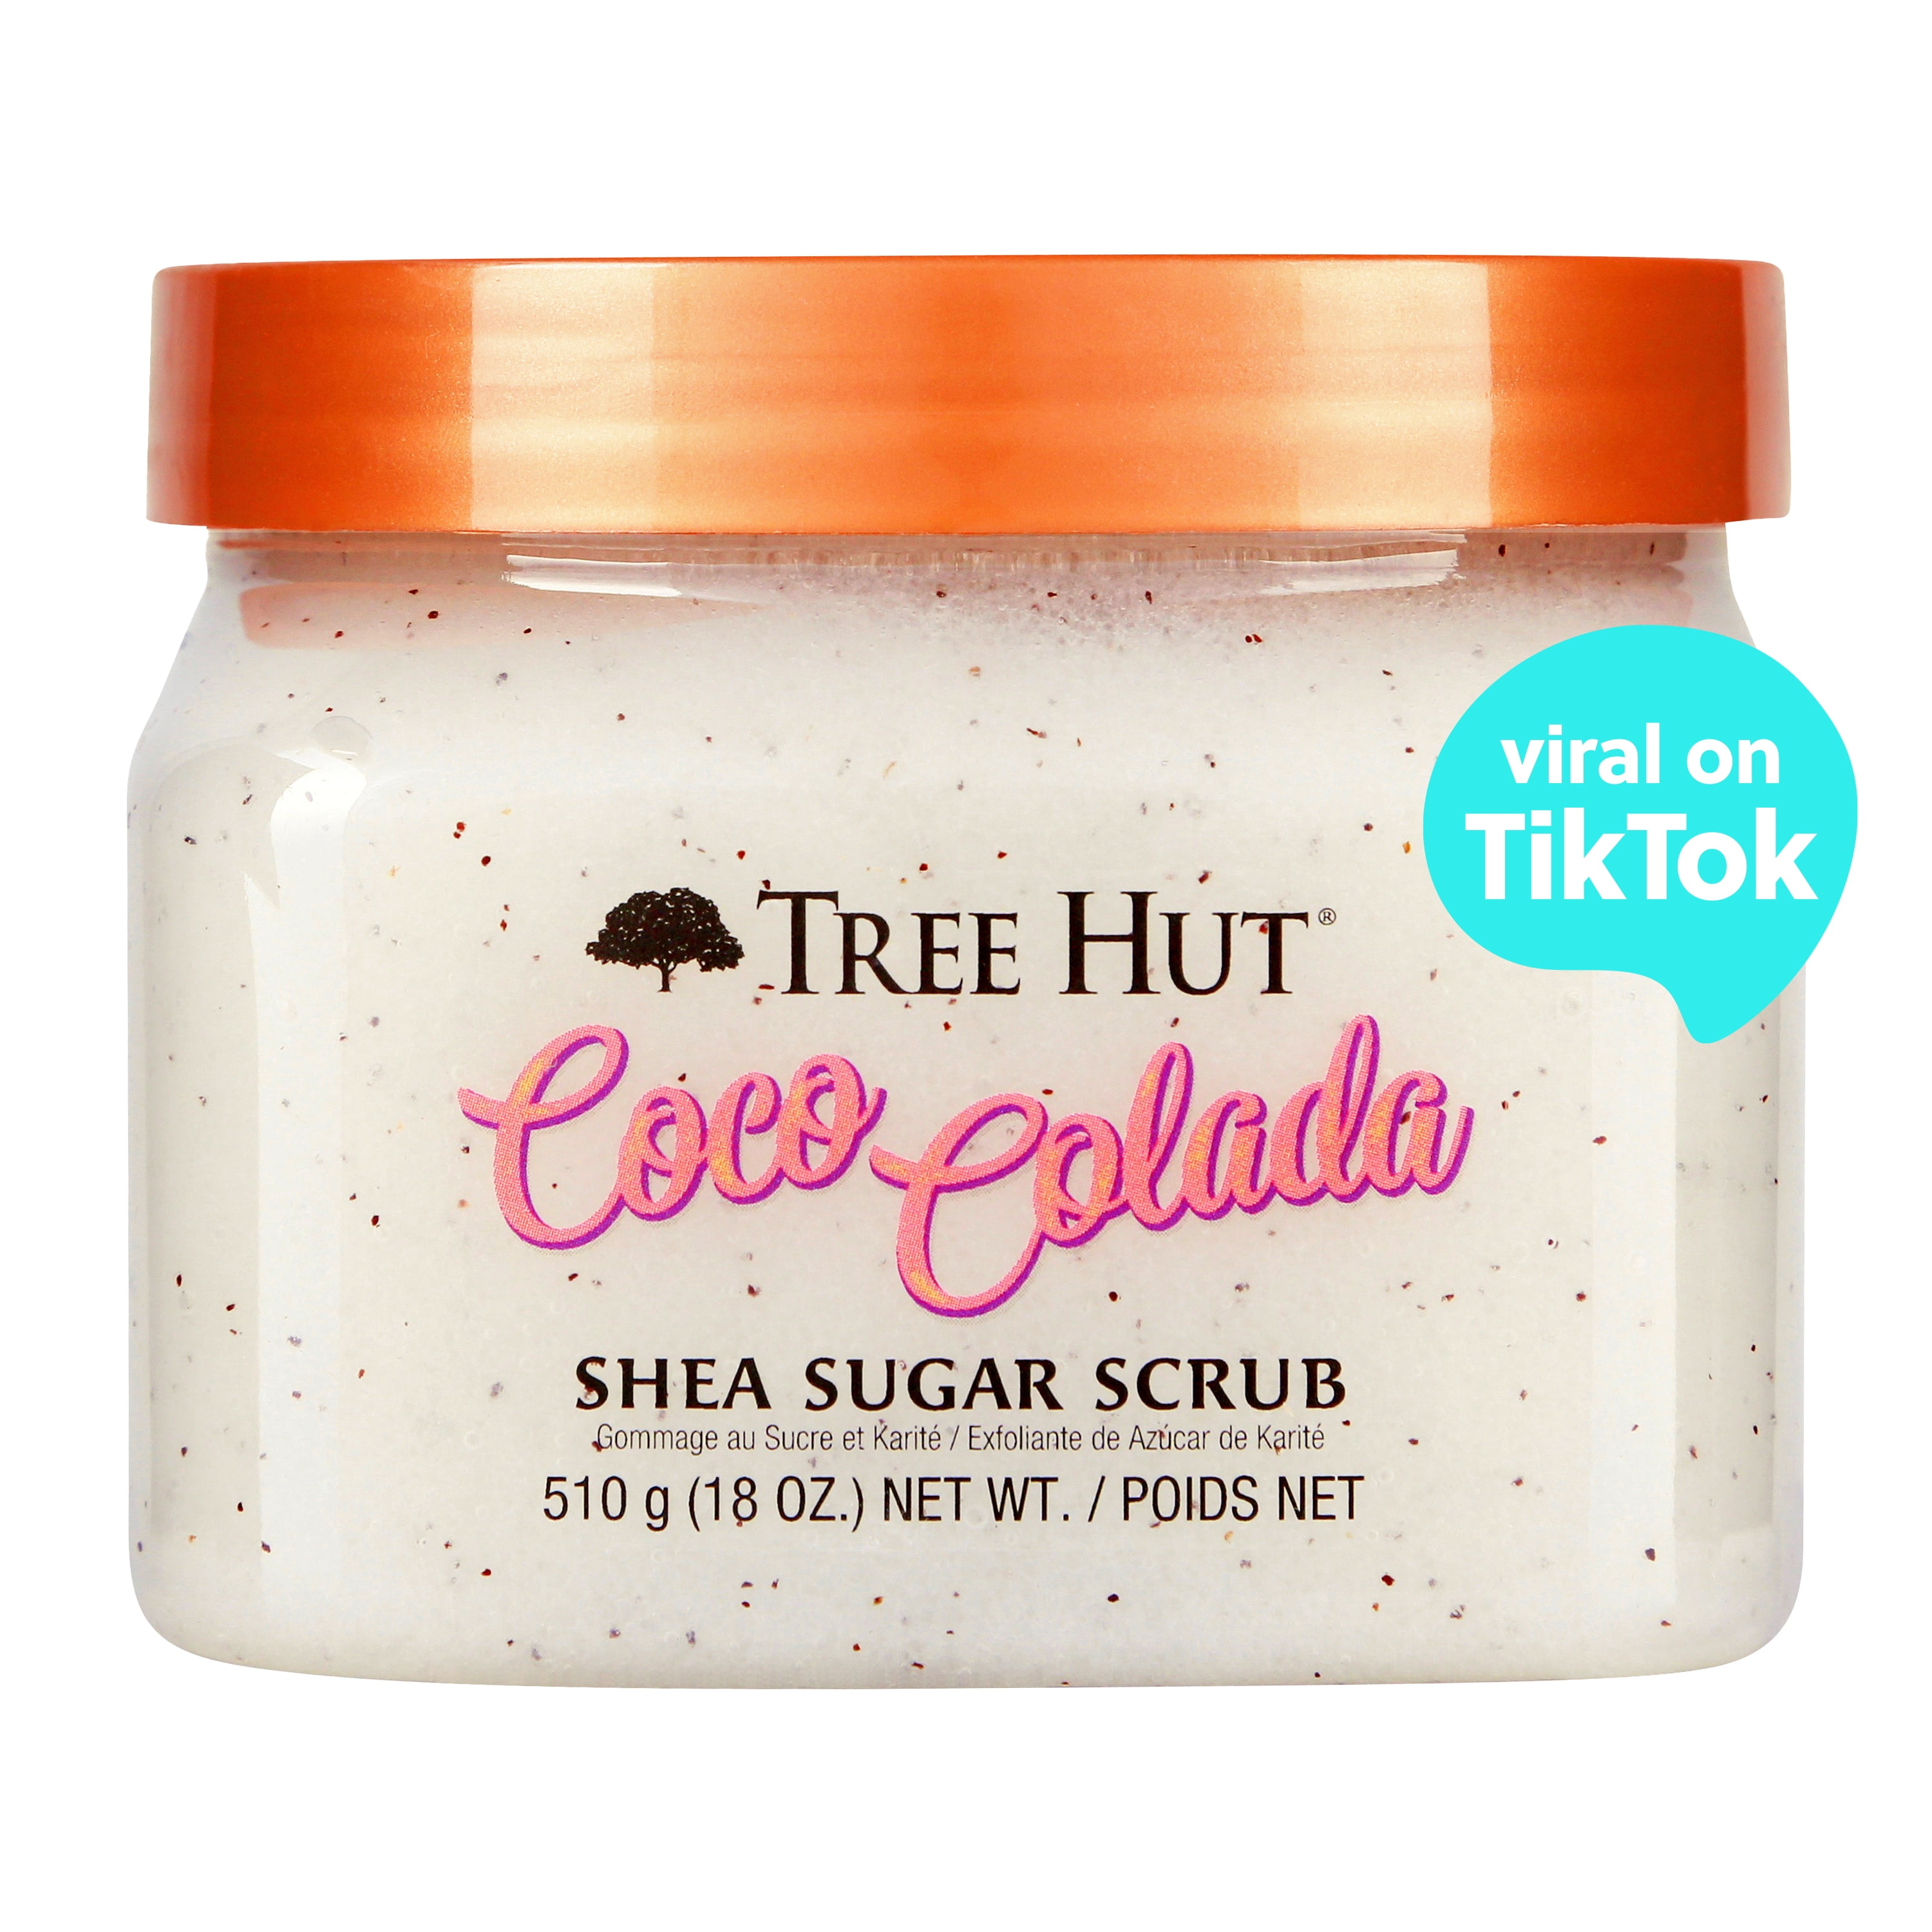 Tree Hut Coco Colada Shea Sugar Exfoliating and Hydrating Body Scrub, 18 pic